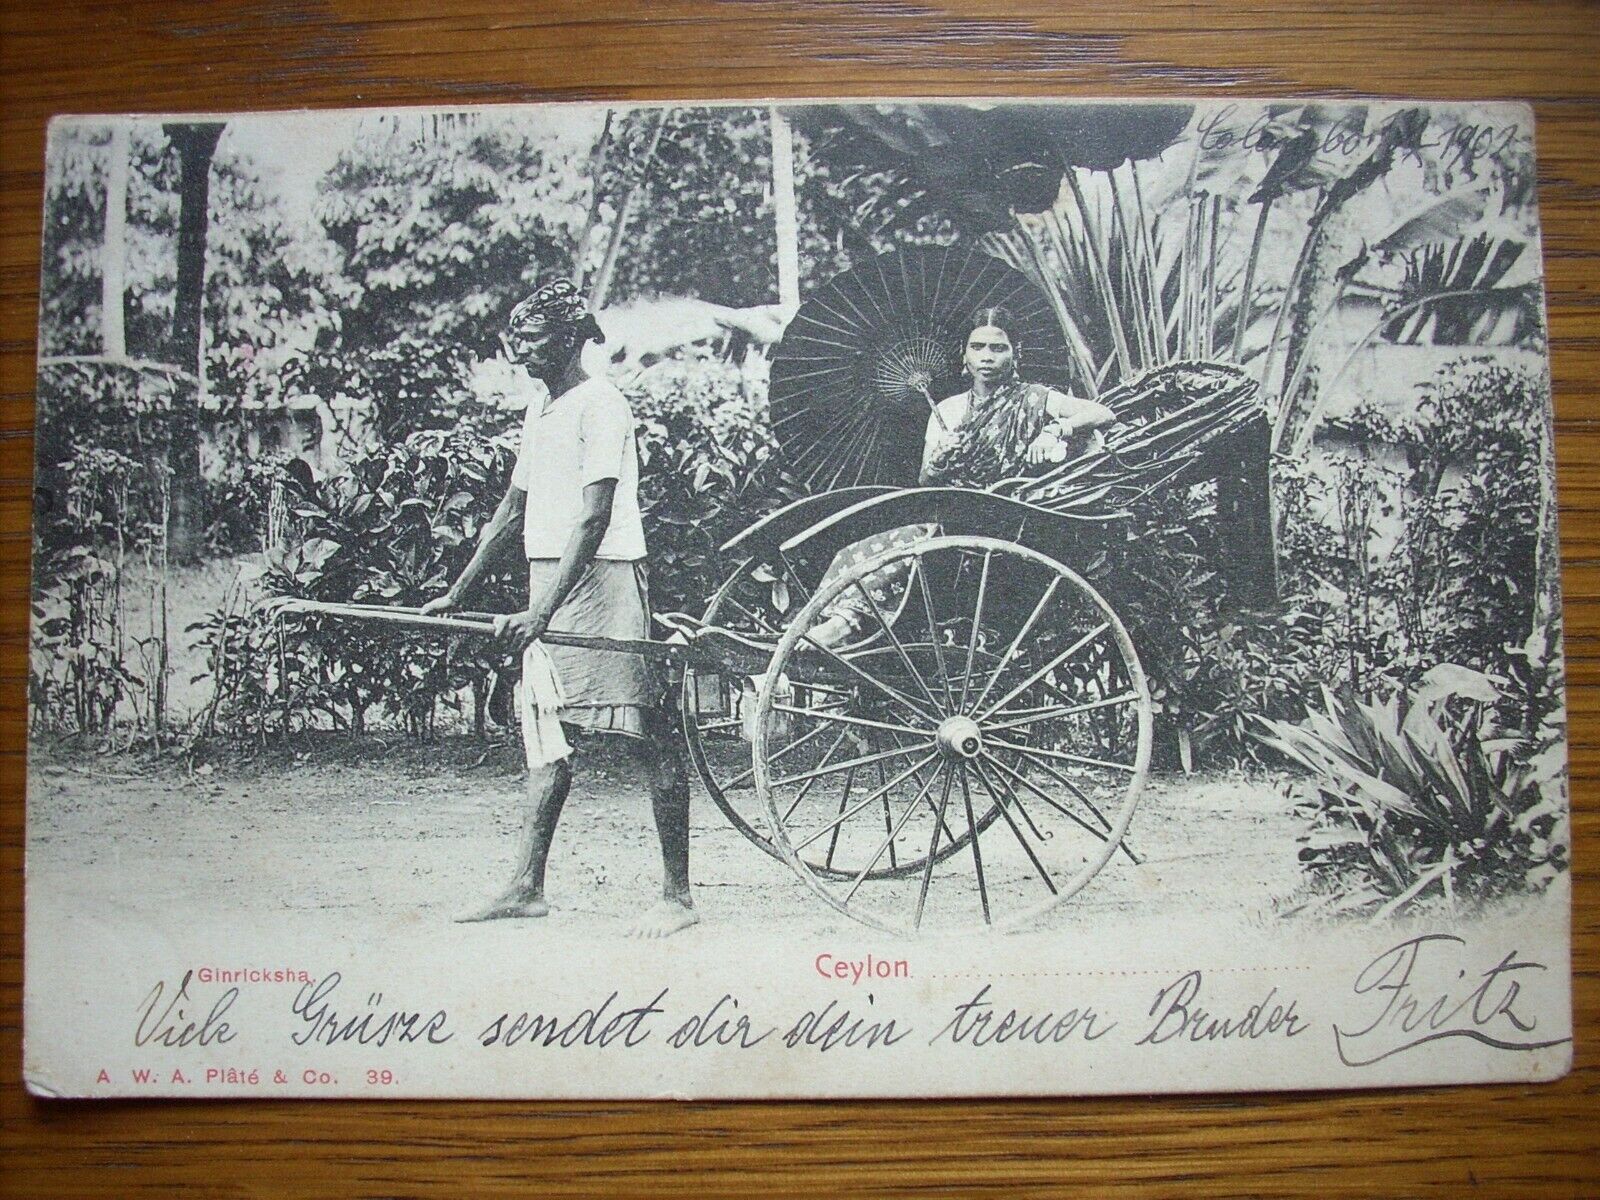 SRI LANKA - CEYLON  1902 - Ginricksha  - original animated postcard 